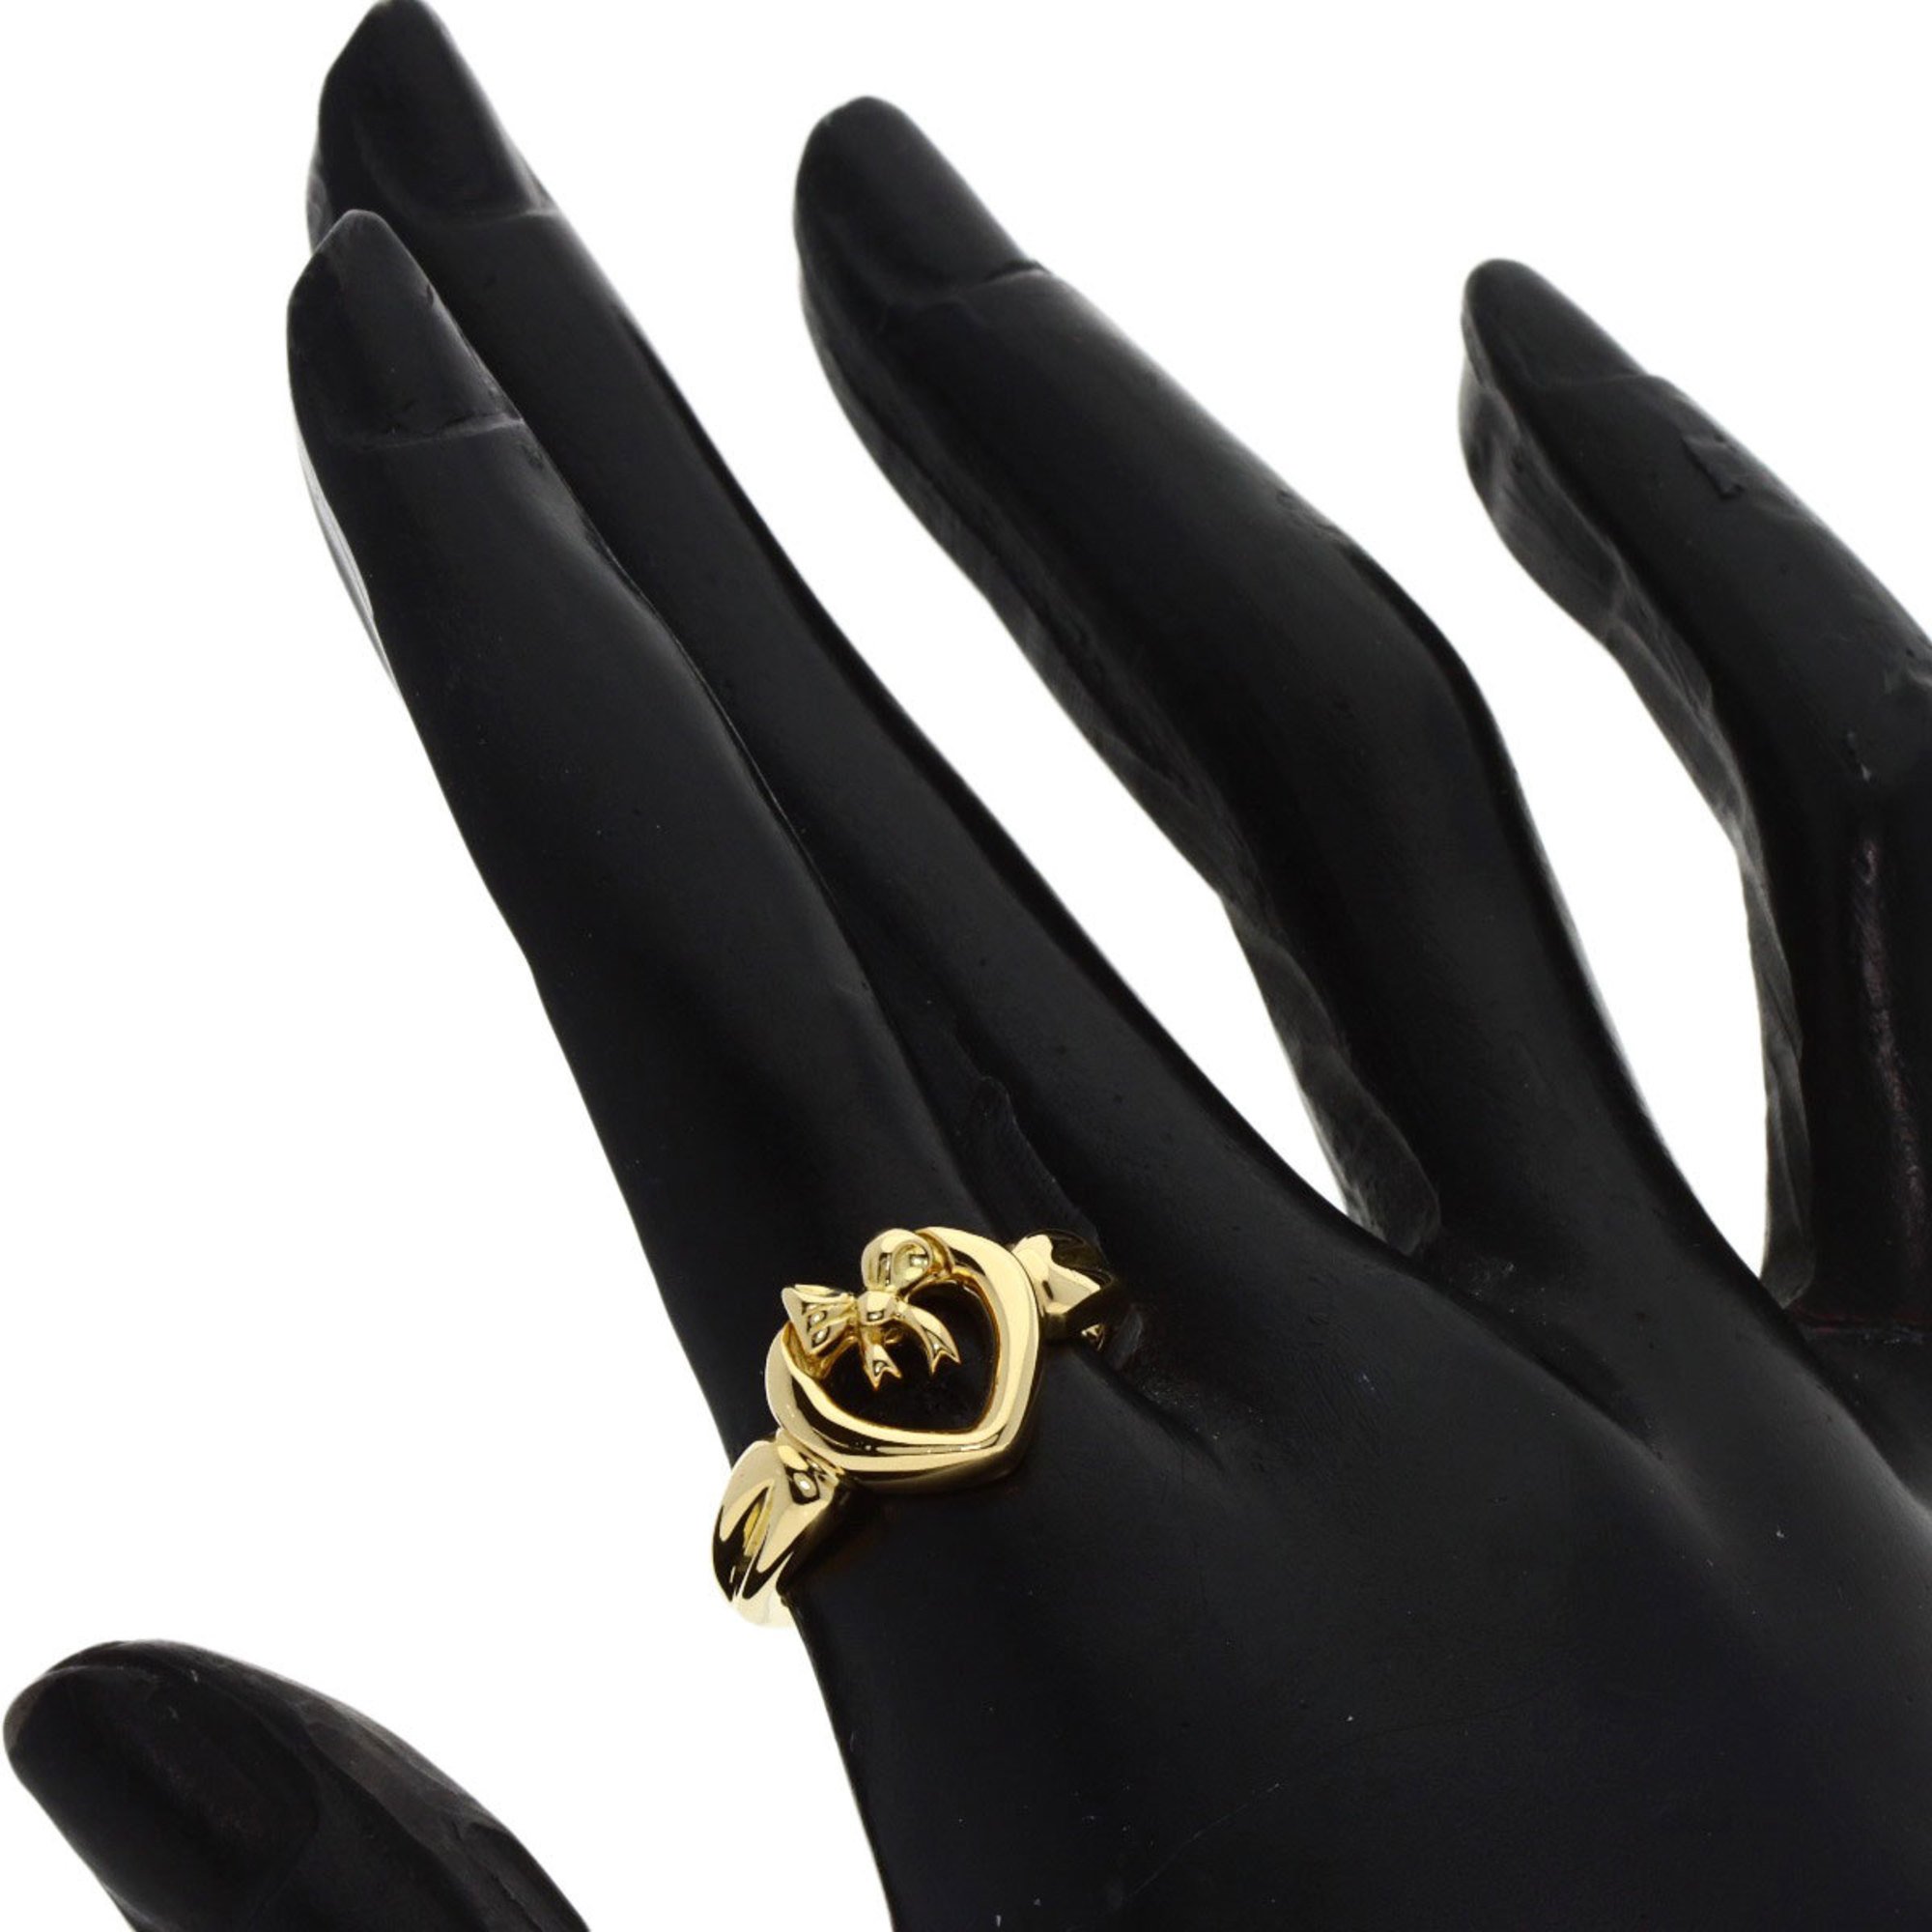 Tiffany Heart with Bowl Ring, 18K Yellow Gold, Women's, TIFFANY&Co.